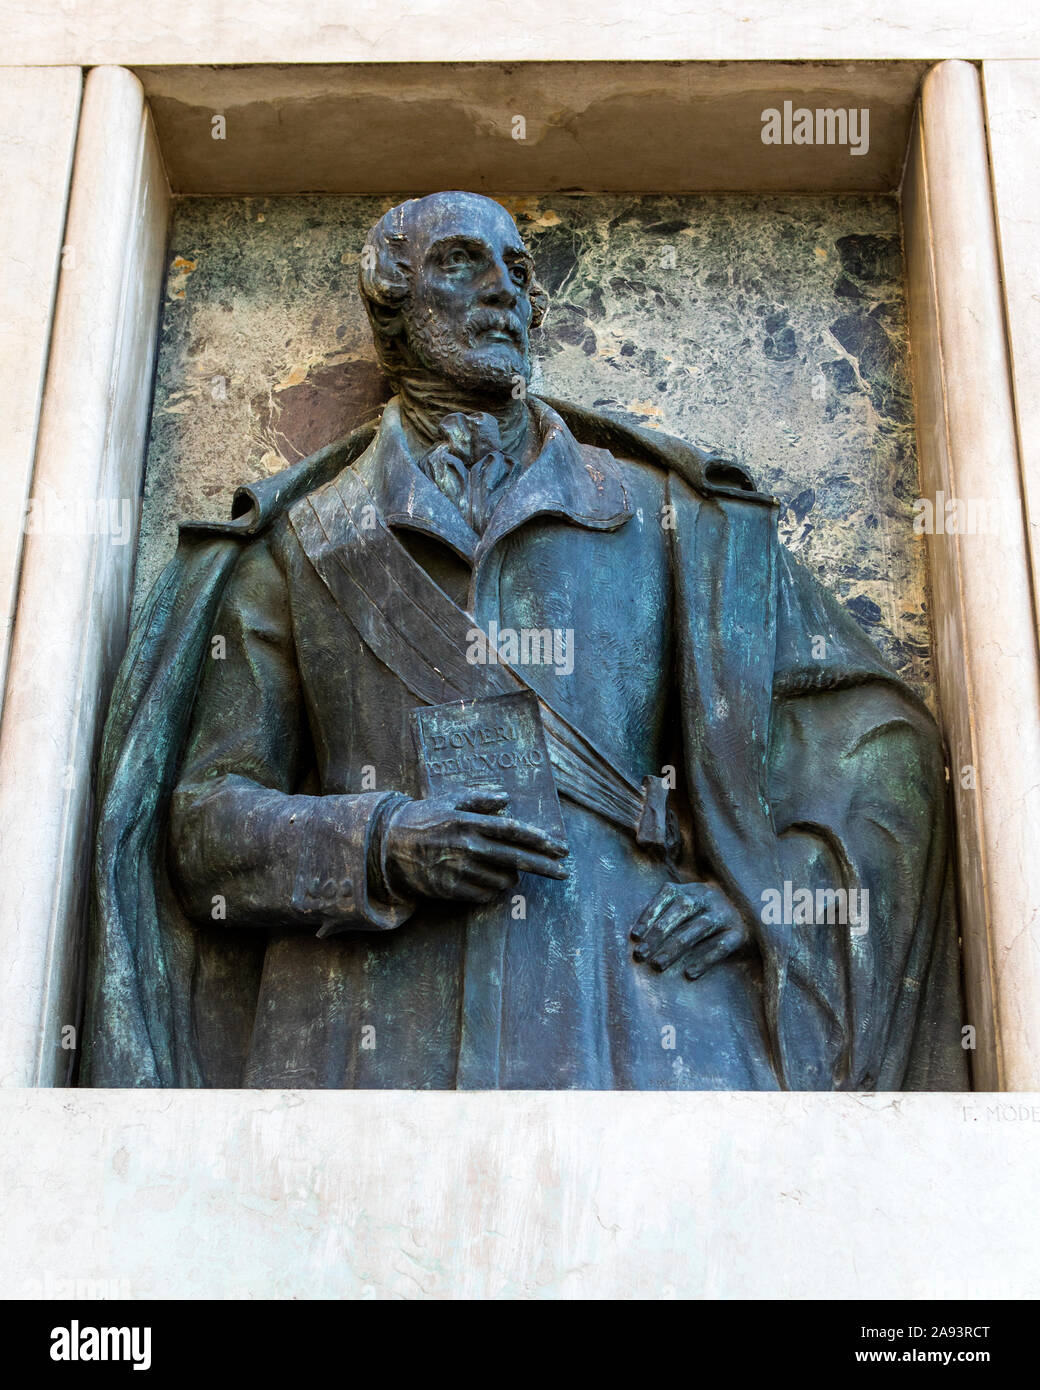 A sculpture of historic Italian politician Giuseppe Mazzini, near the banks of the Grand Canal in Venice, Italy. Stock Photo